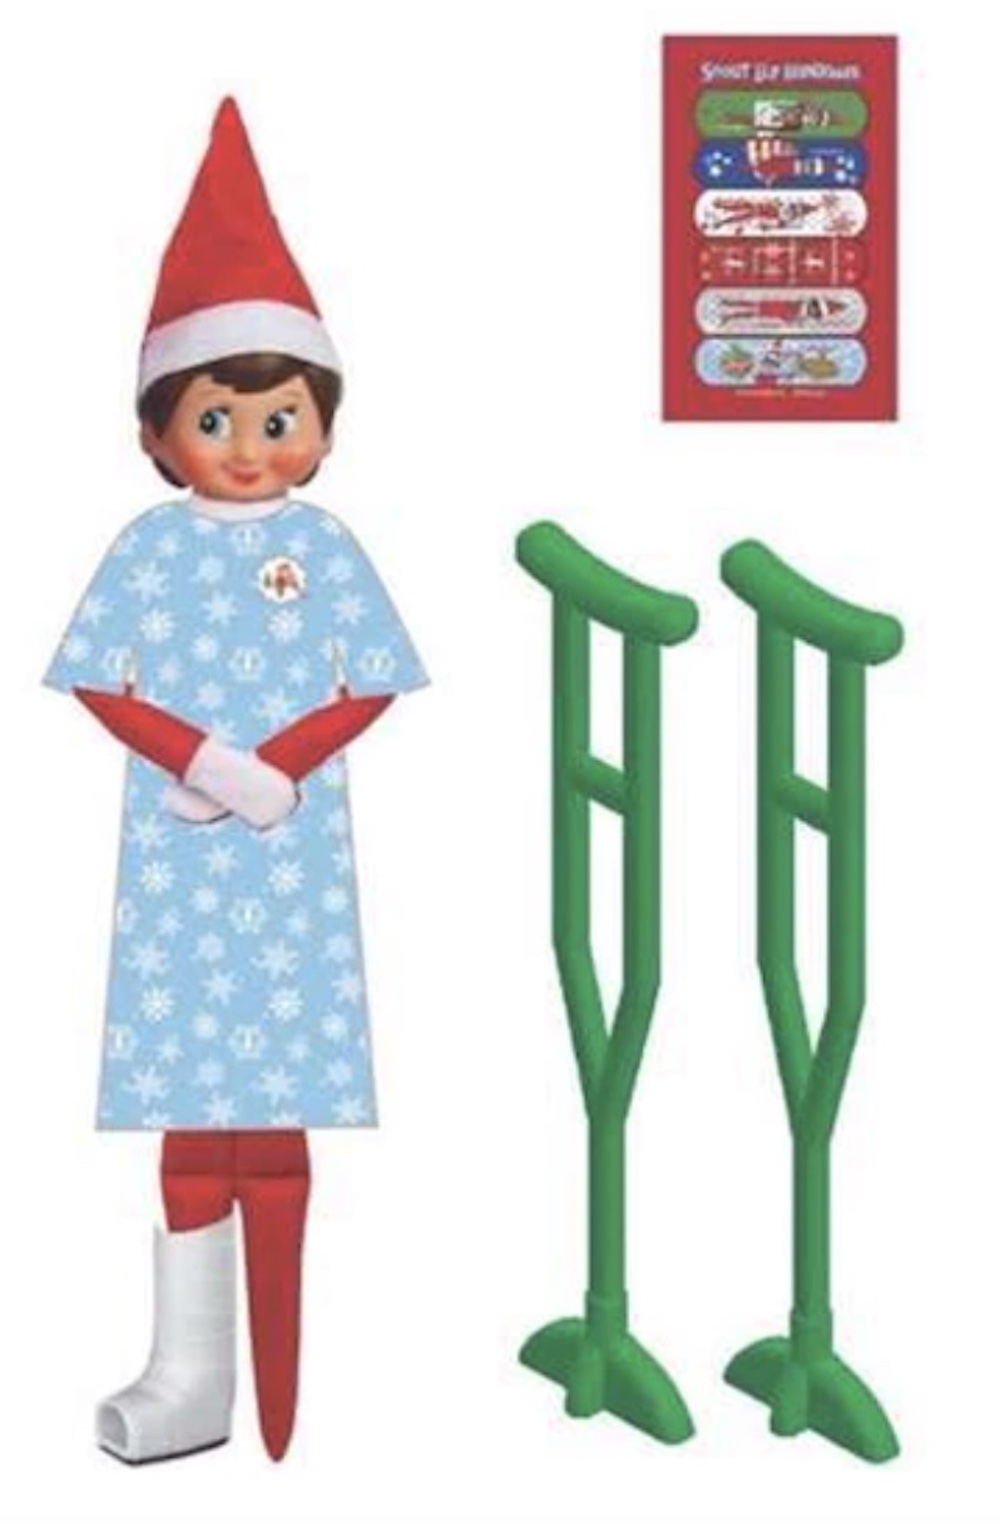 Elf on the Shelf care kit